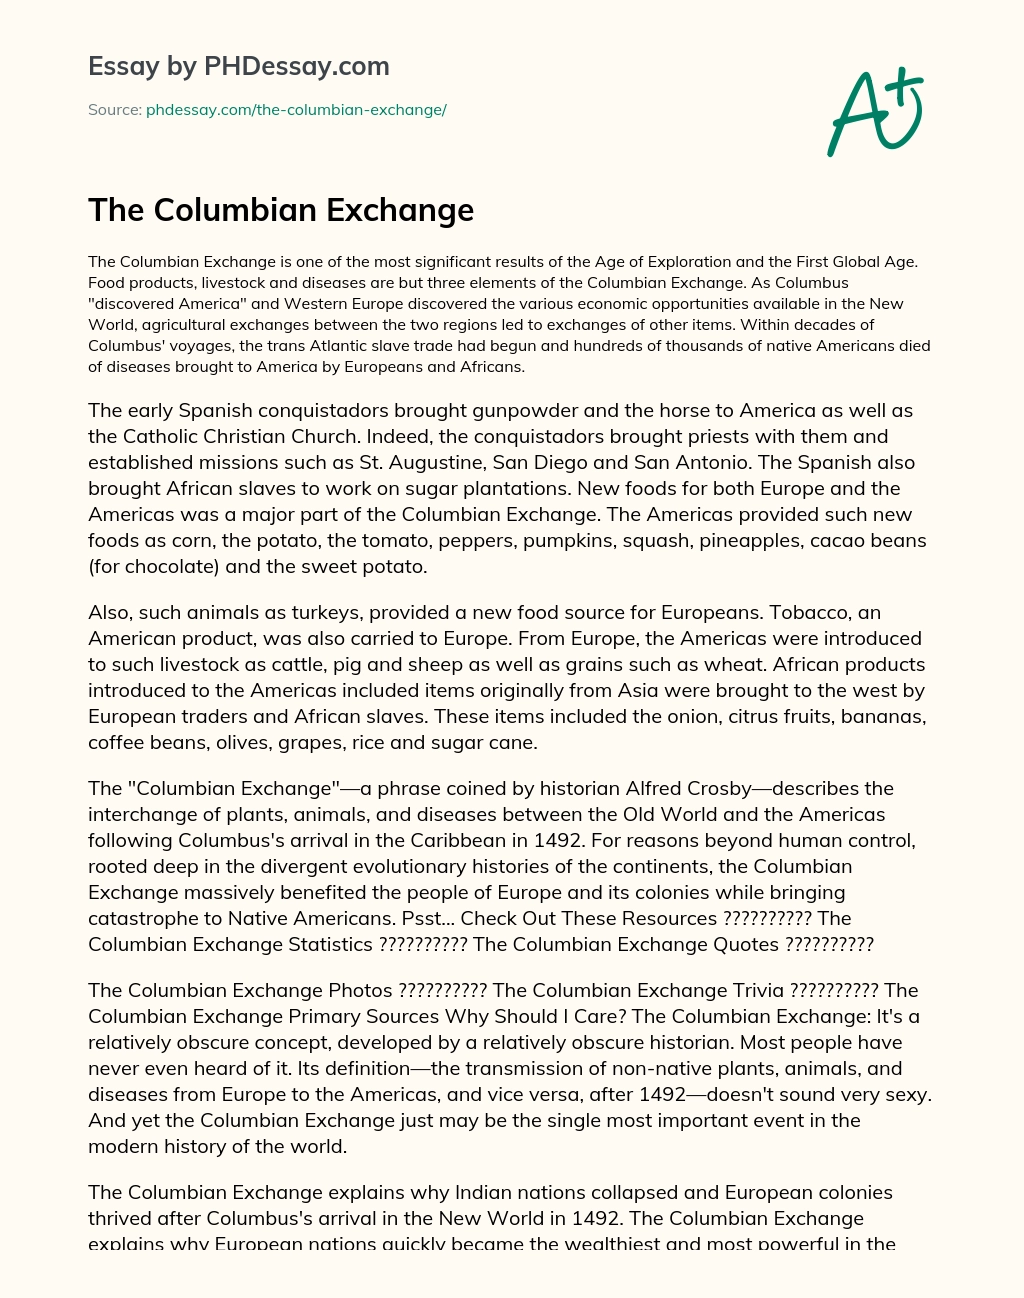 The Columbian Exchange essay